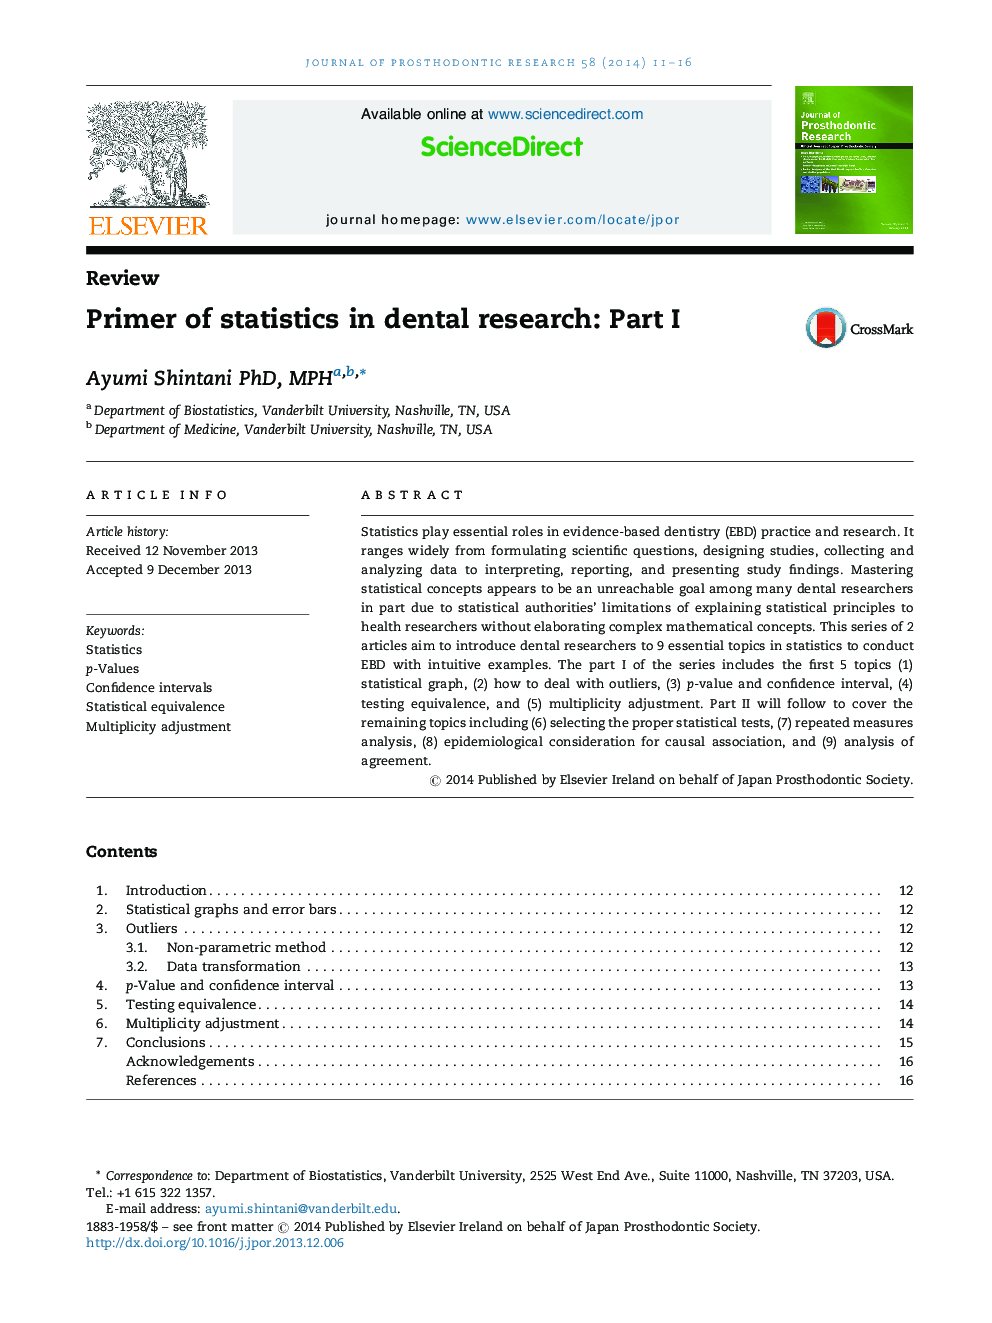 Primer of statistics in dental research: Part I